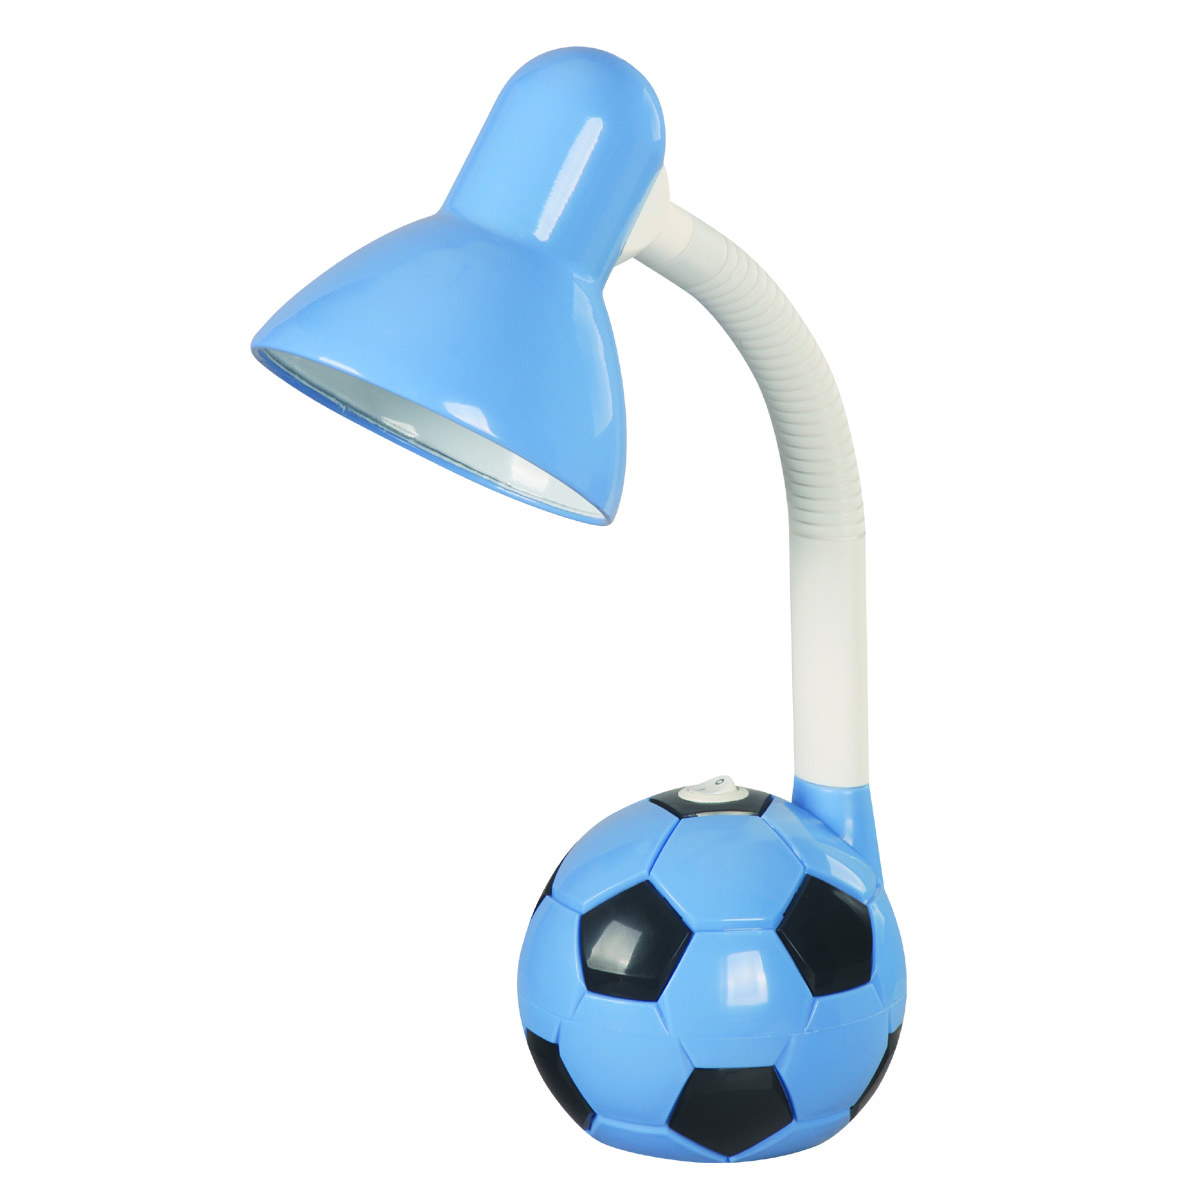 Football table lamp